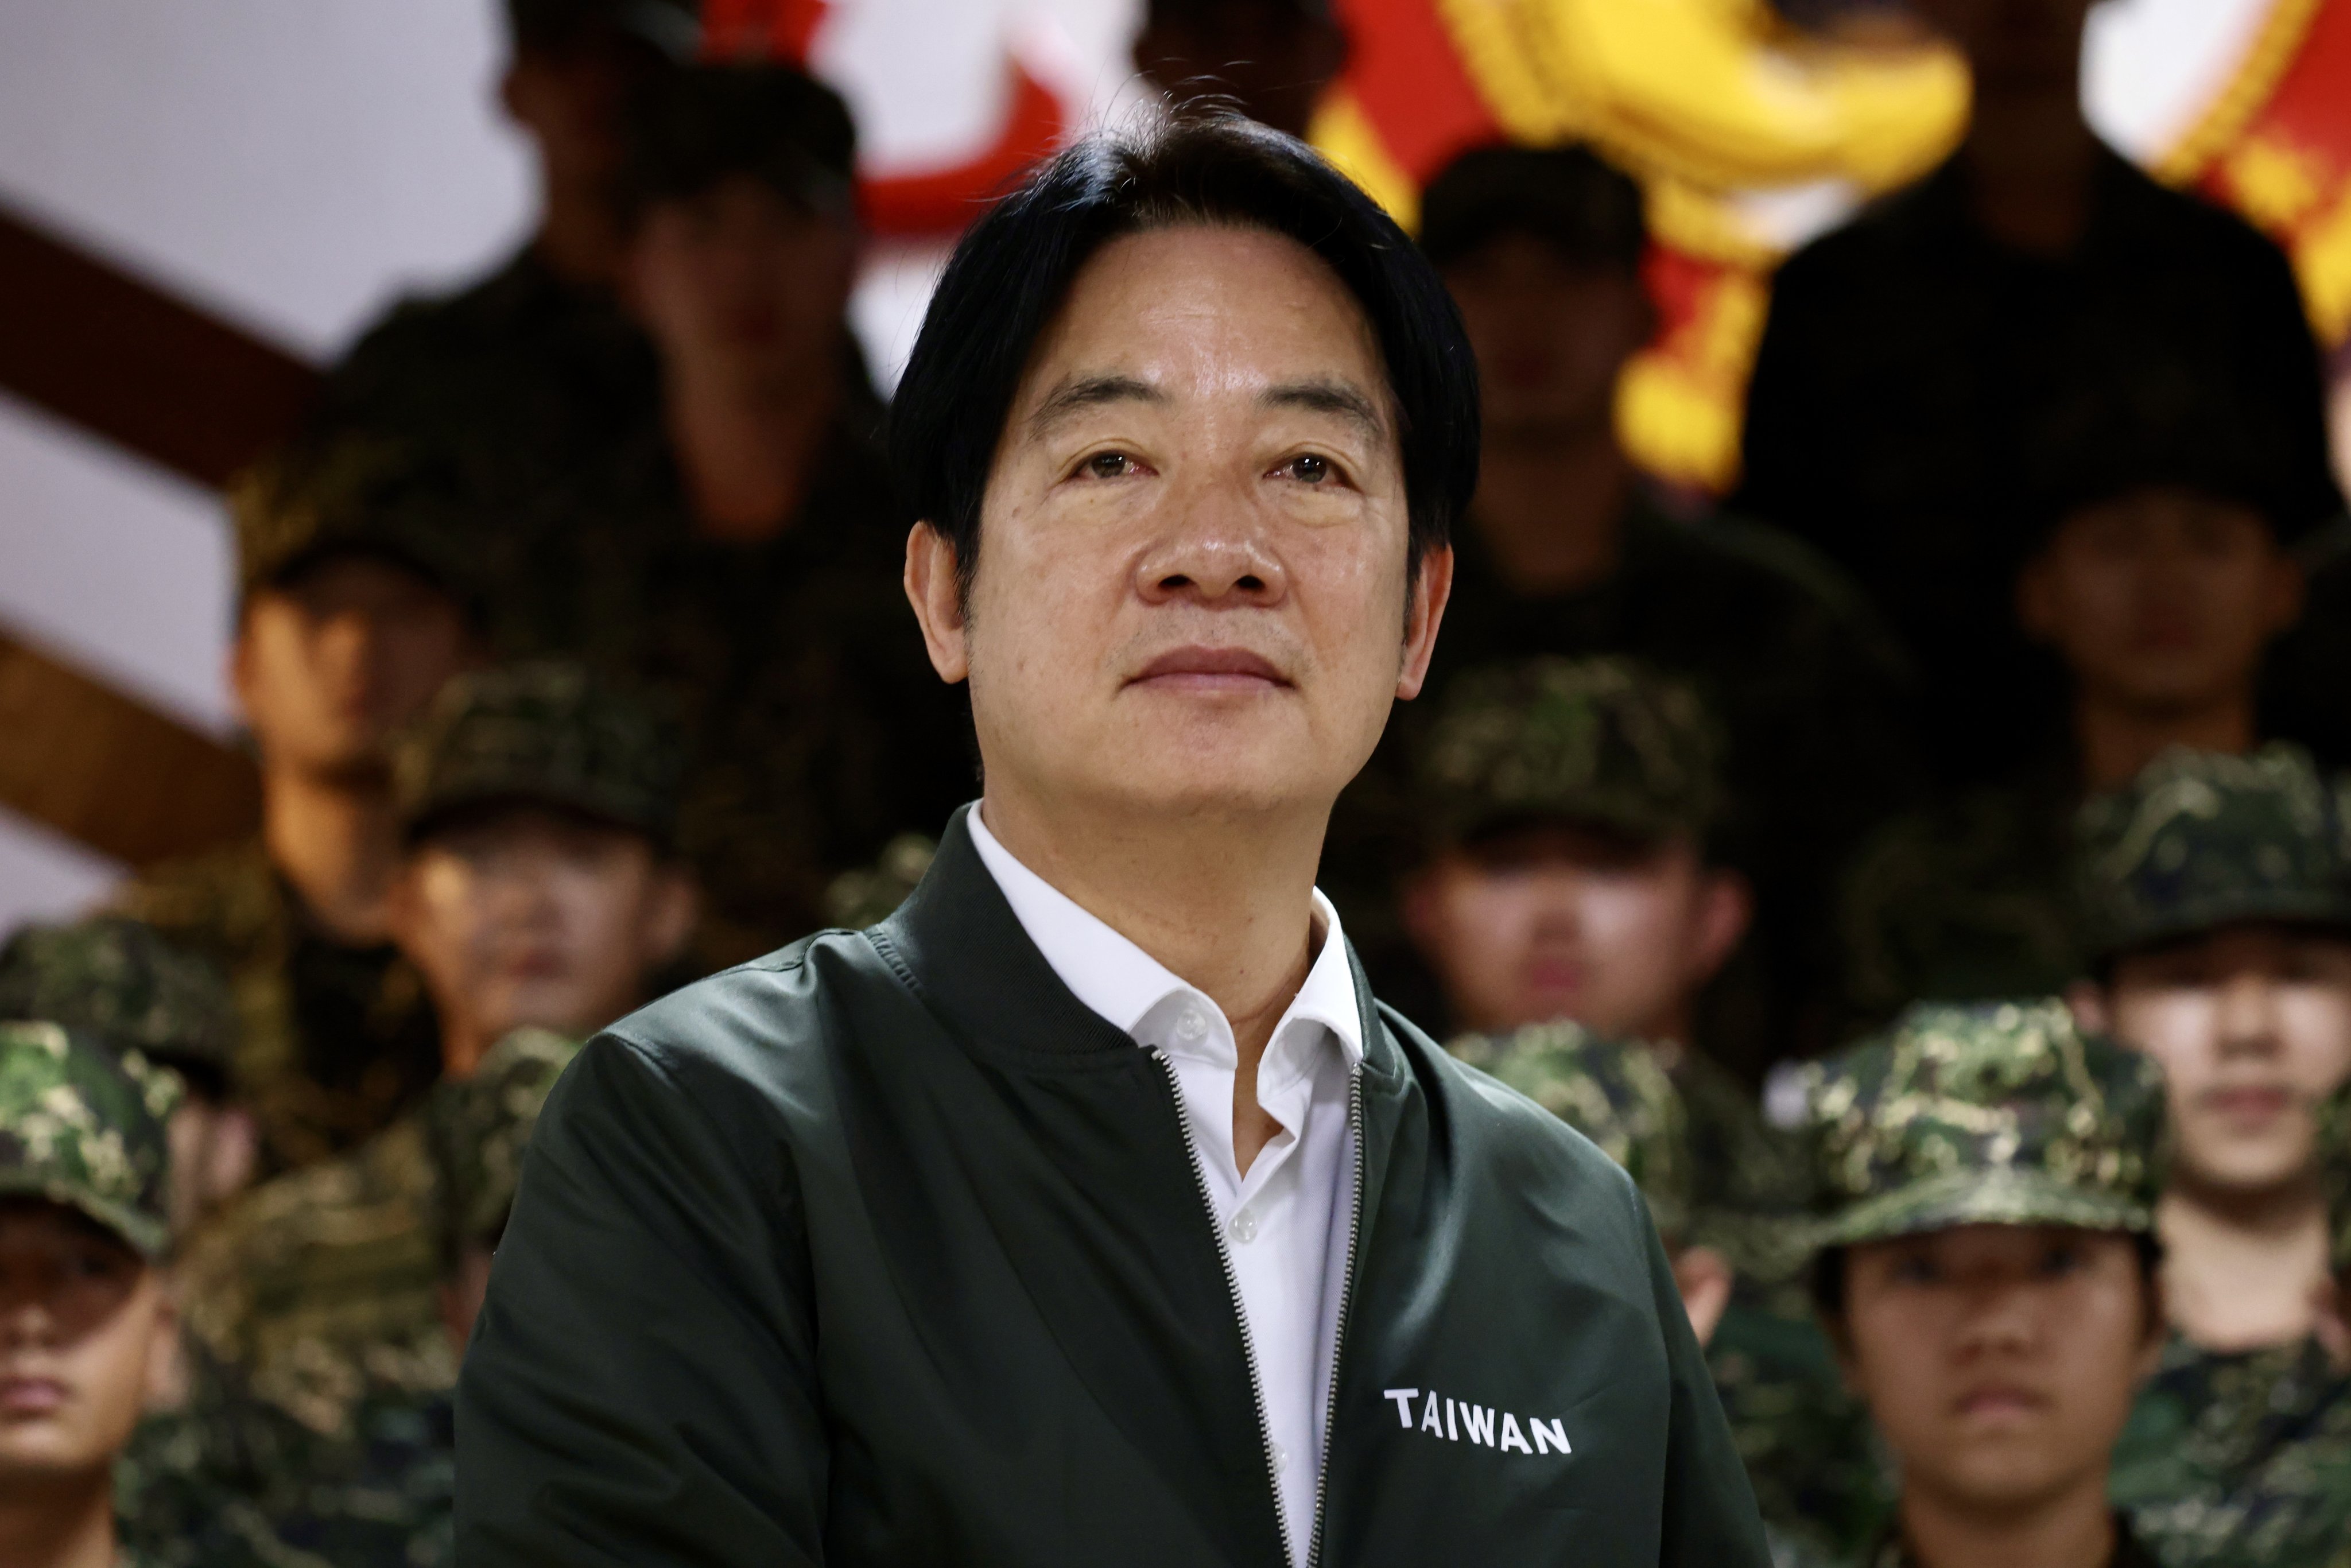 Taiwan’s leader William Lai. Photo: EPA-EFE